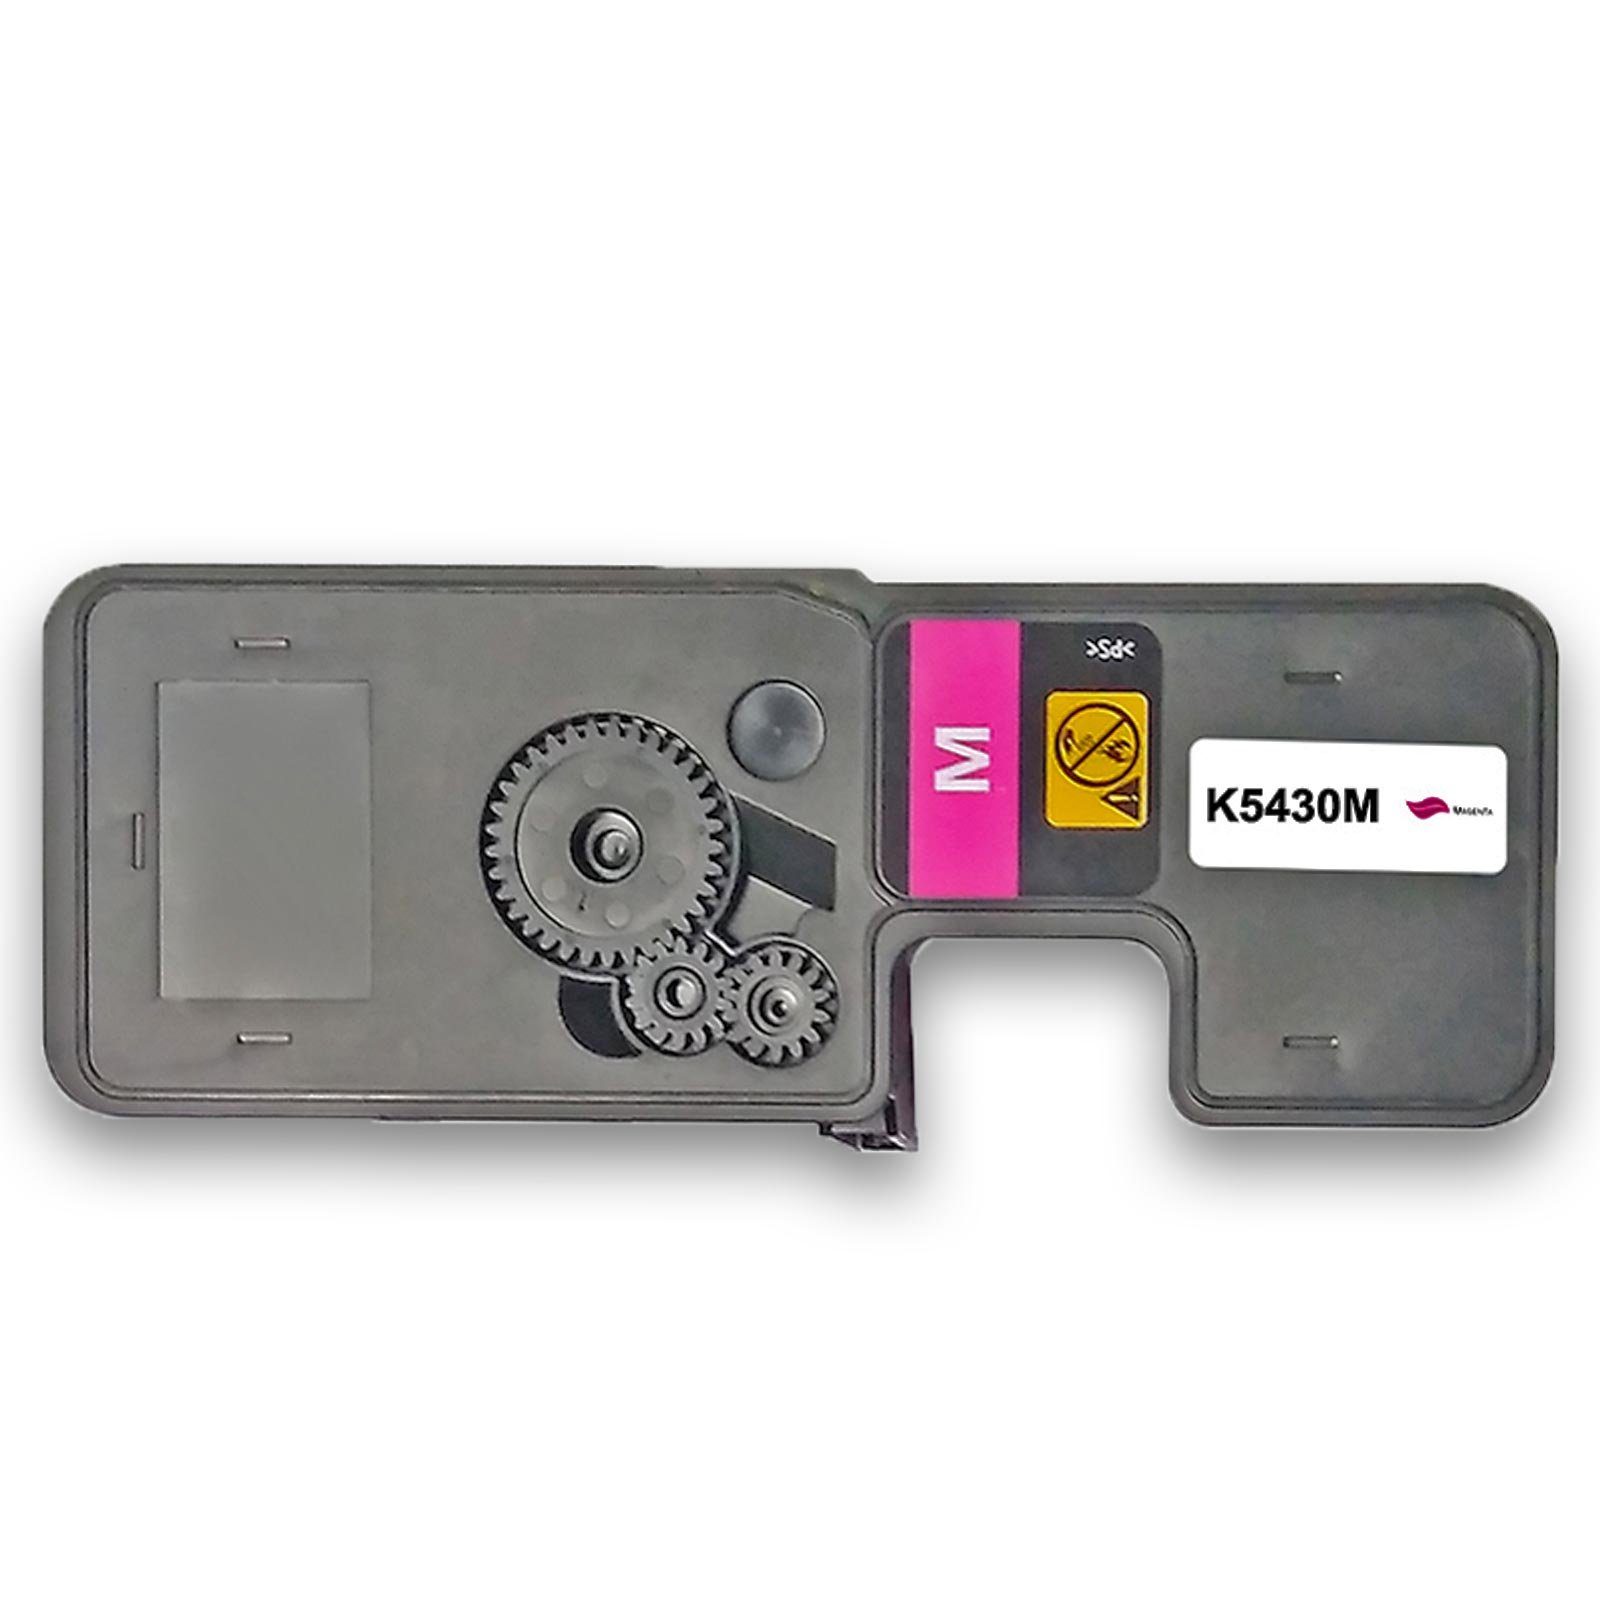 Gutes Angebot Gigao Tonerkartusche Kompatibel Kyocera Magenta, Lieferumfang: TK-5430M Kyocera zu TK-5430M Tonerkassette kompatibel 1x